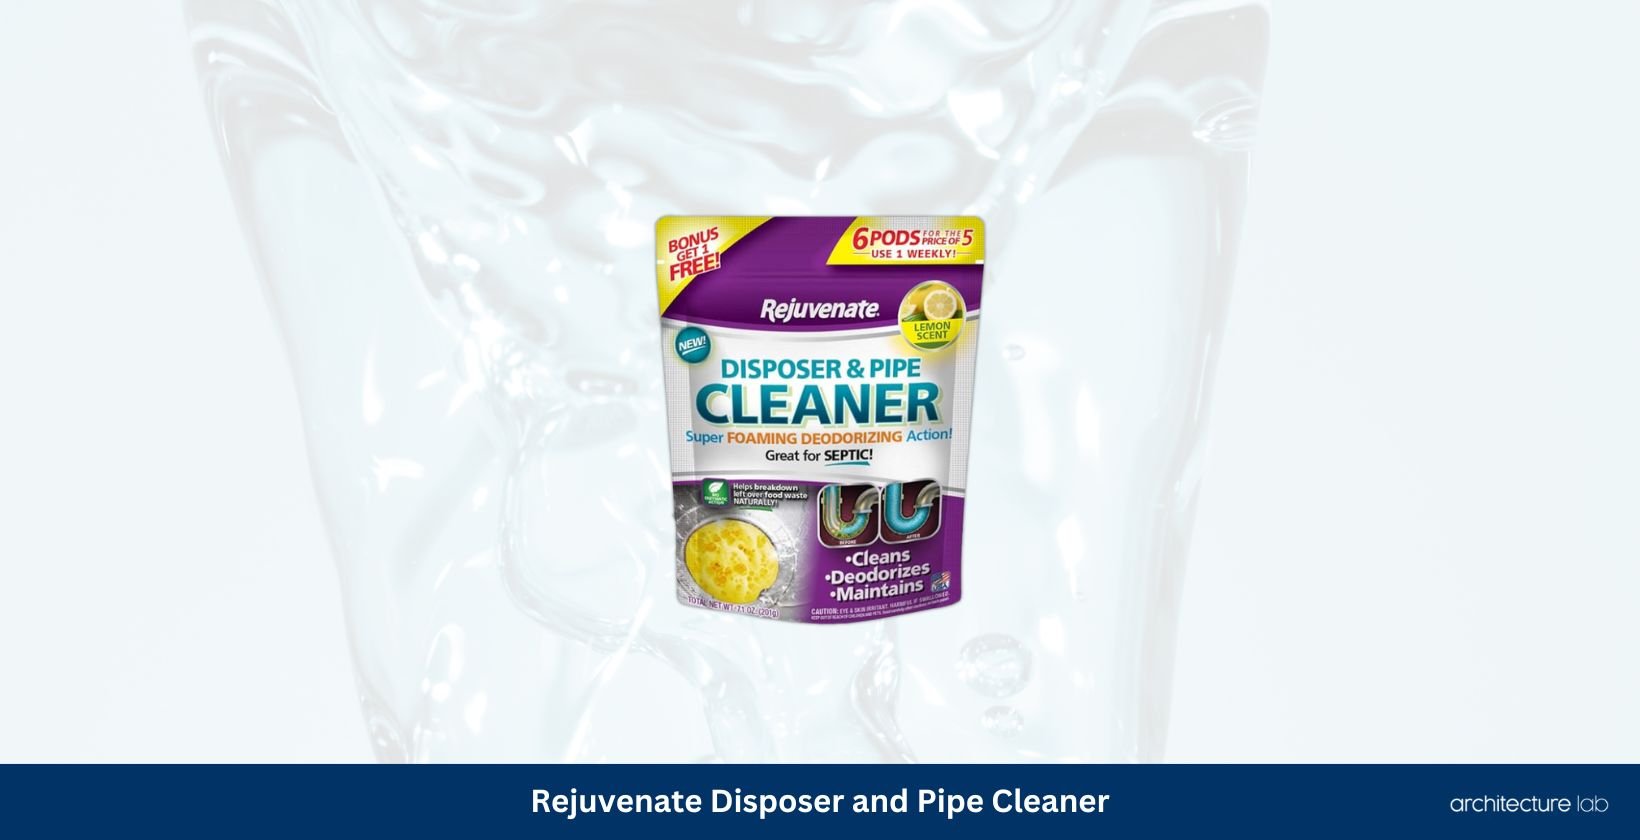 Rejuvenate disposer and pipe cleaner